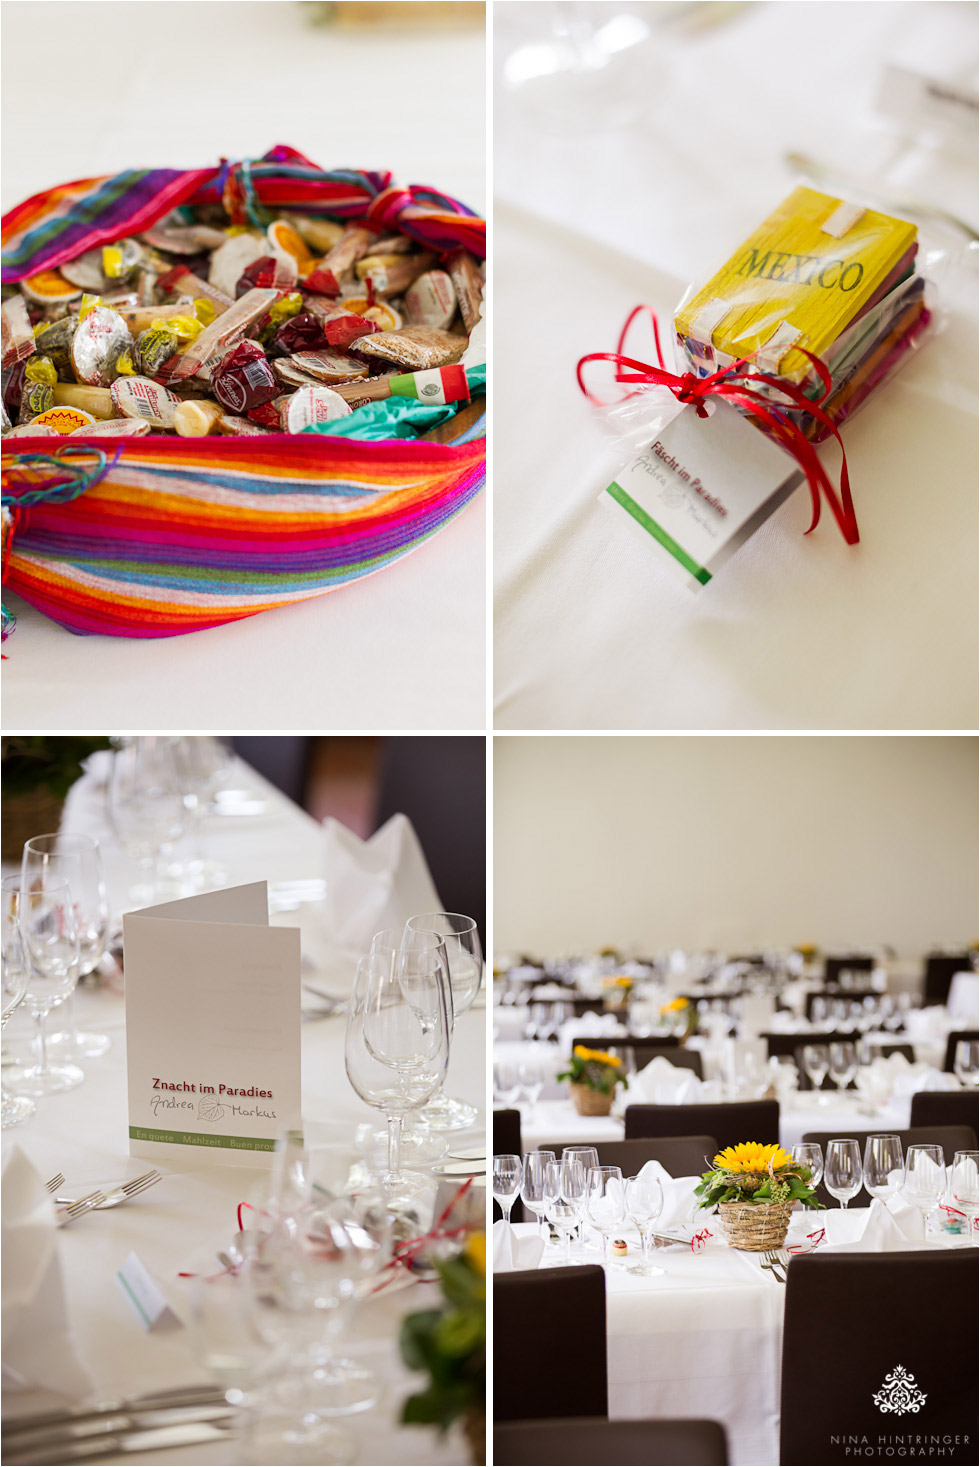 Mexican Color Explosion in Switzerland | Andrea & Markus | Schaffhausen - Blog of Nina Hintringer Photography - Wedding Photography, Wedding Reportage and Destination Weddings